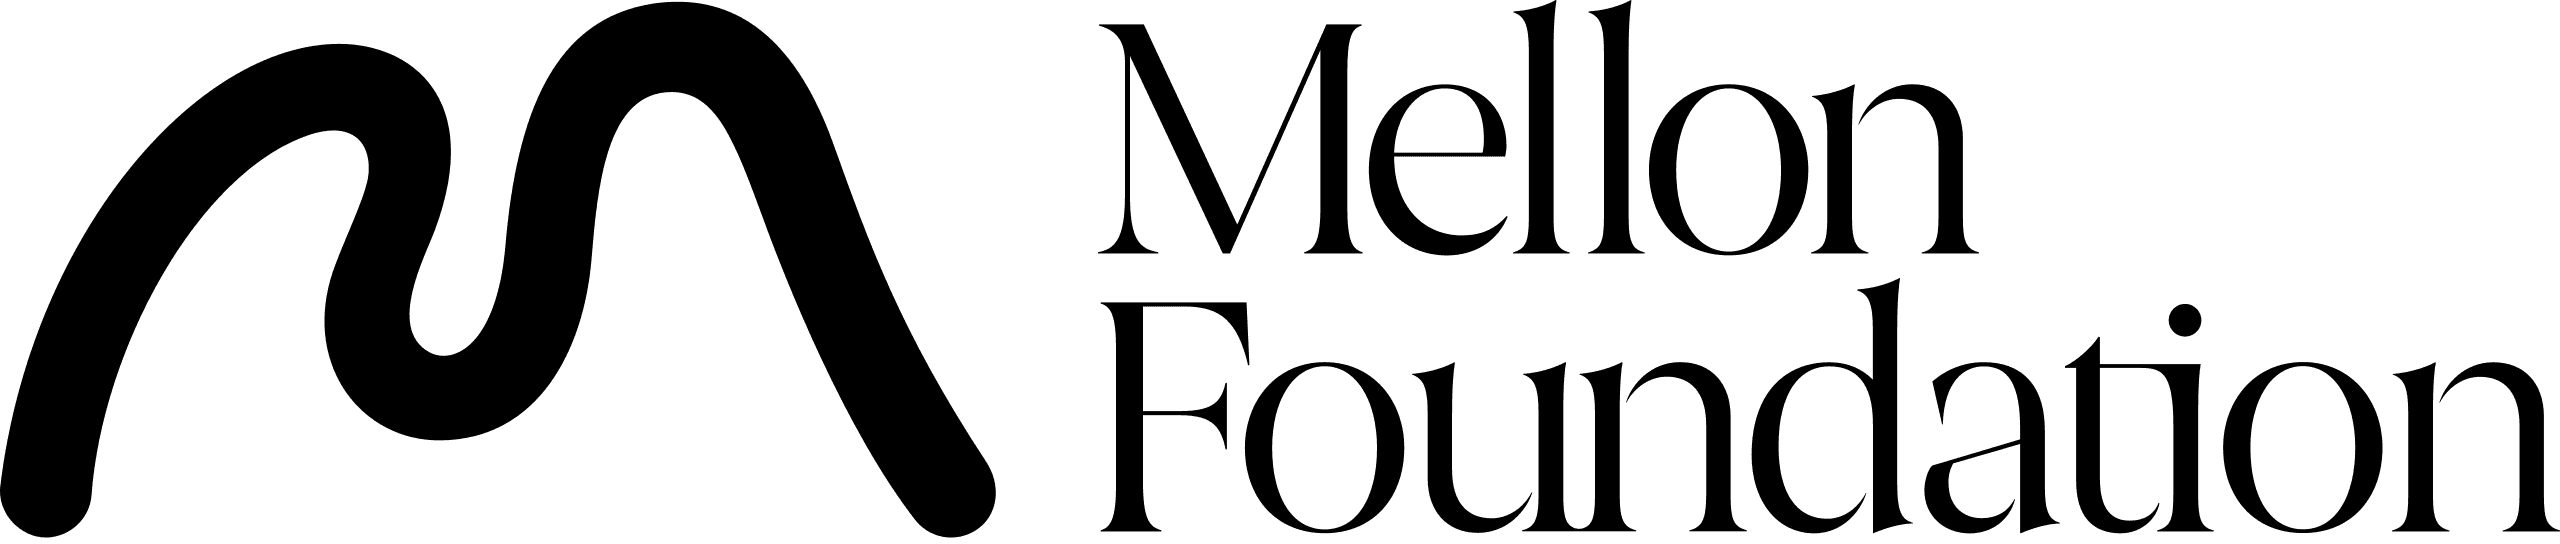 Mellon_Foundation_logo_2022.svg.png